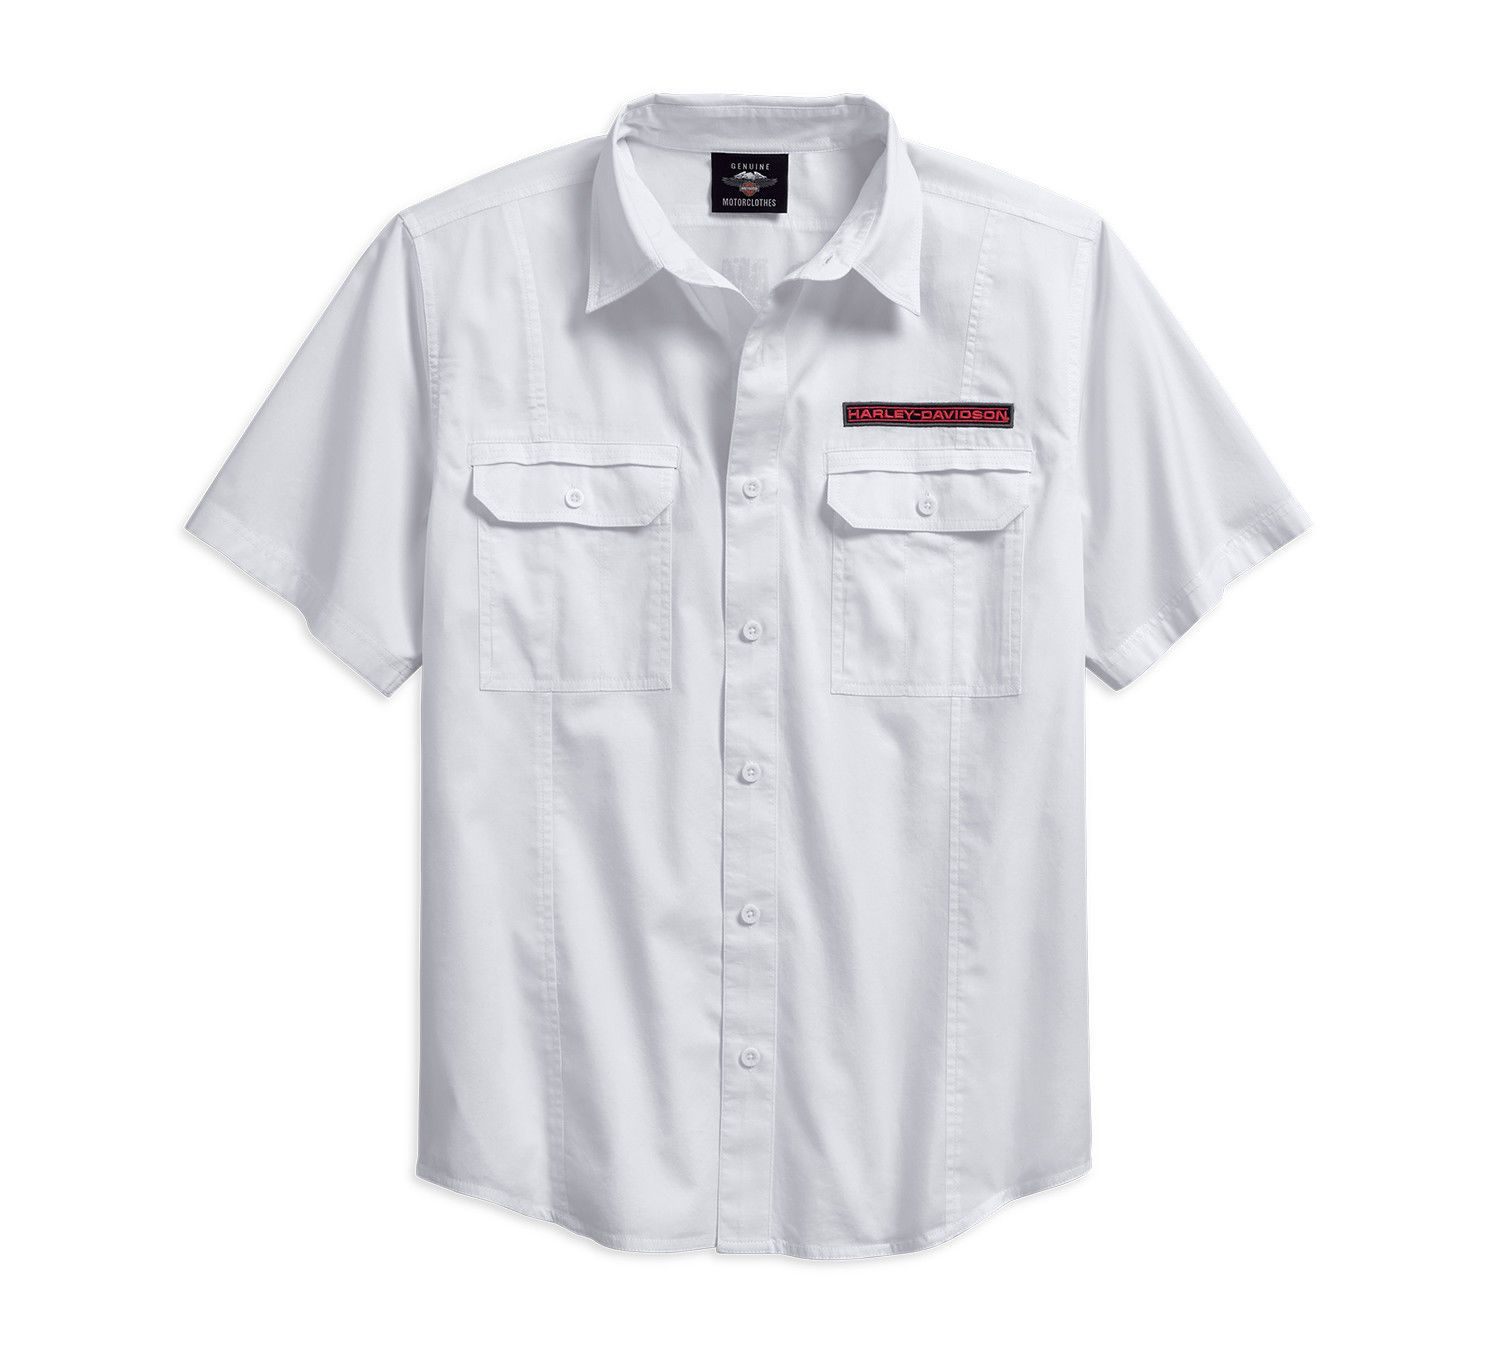 Harley-Davidson Men's Checkerboard Graphic Short Sleeve Shirt, White 96194-18VM